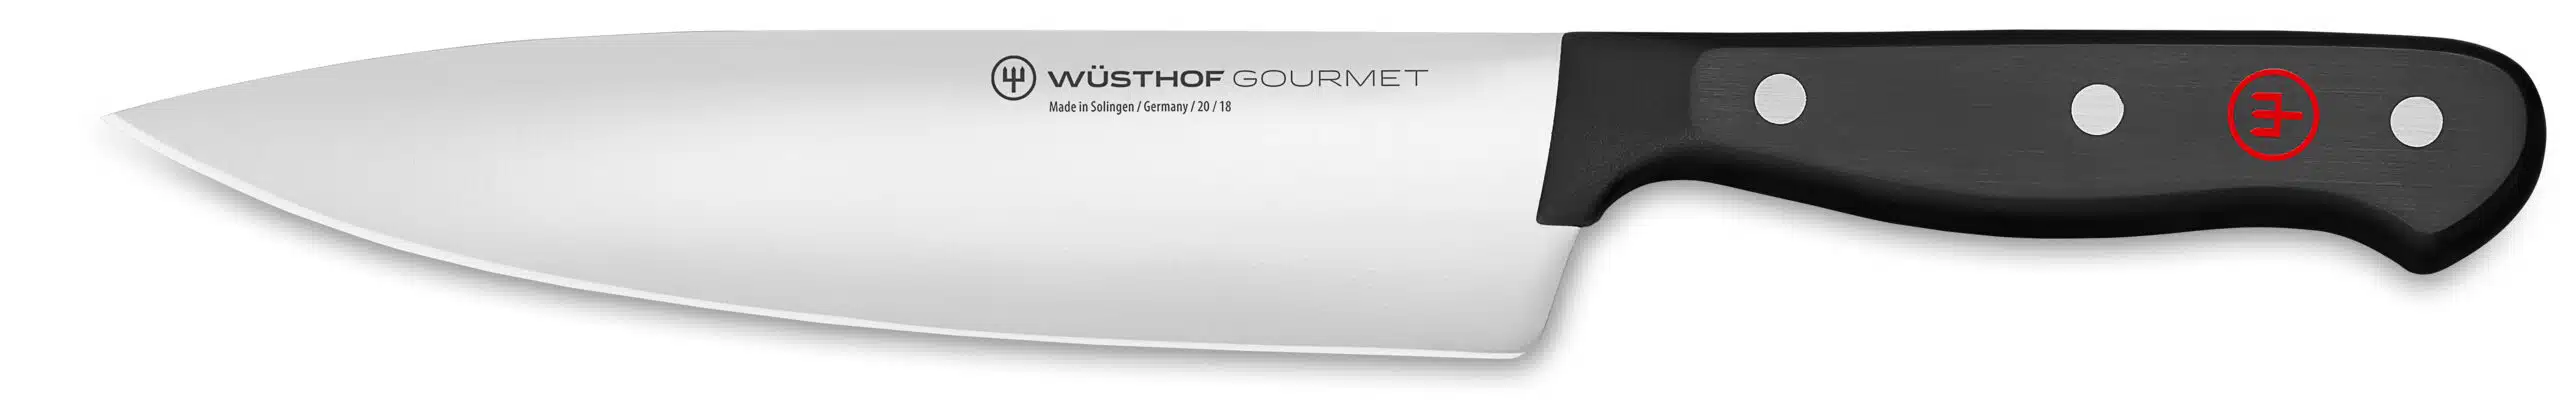 Wusthof Gourmet Cook's Knife 18cm